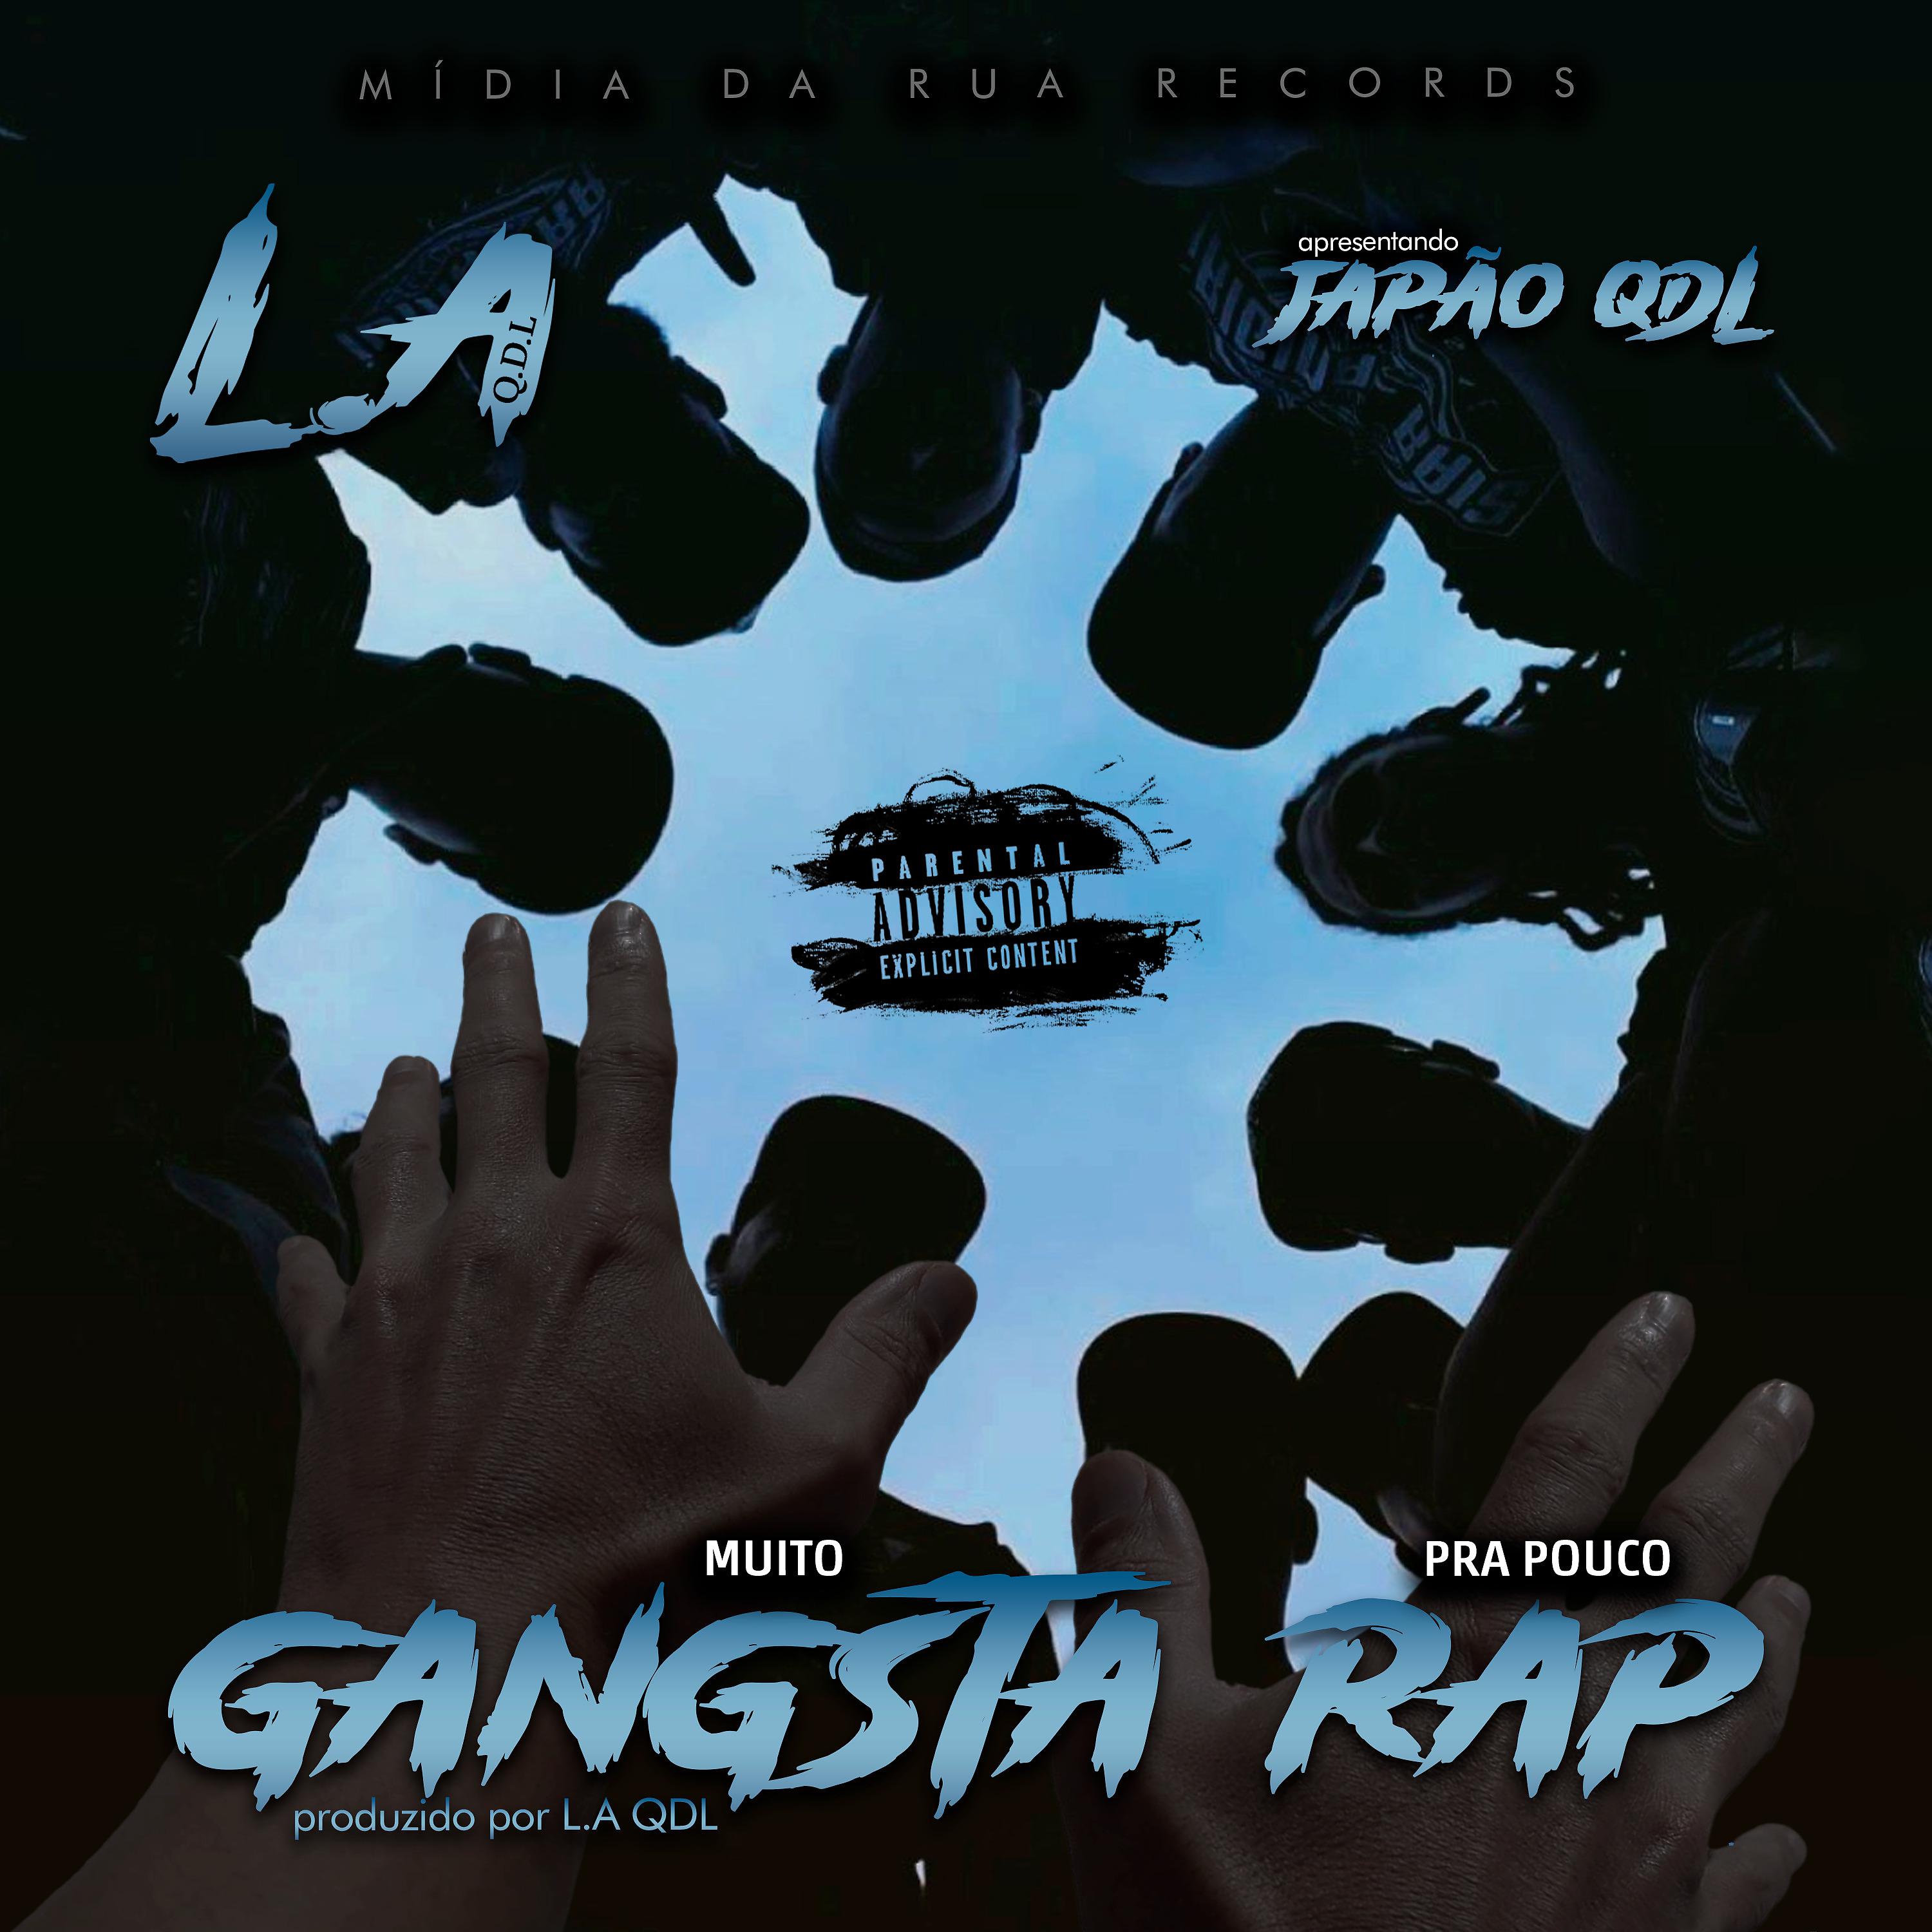 Постер альбома Muito Gangsta pra Pouco Rap